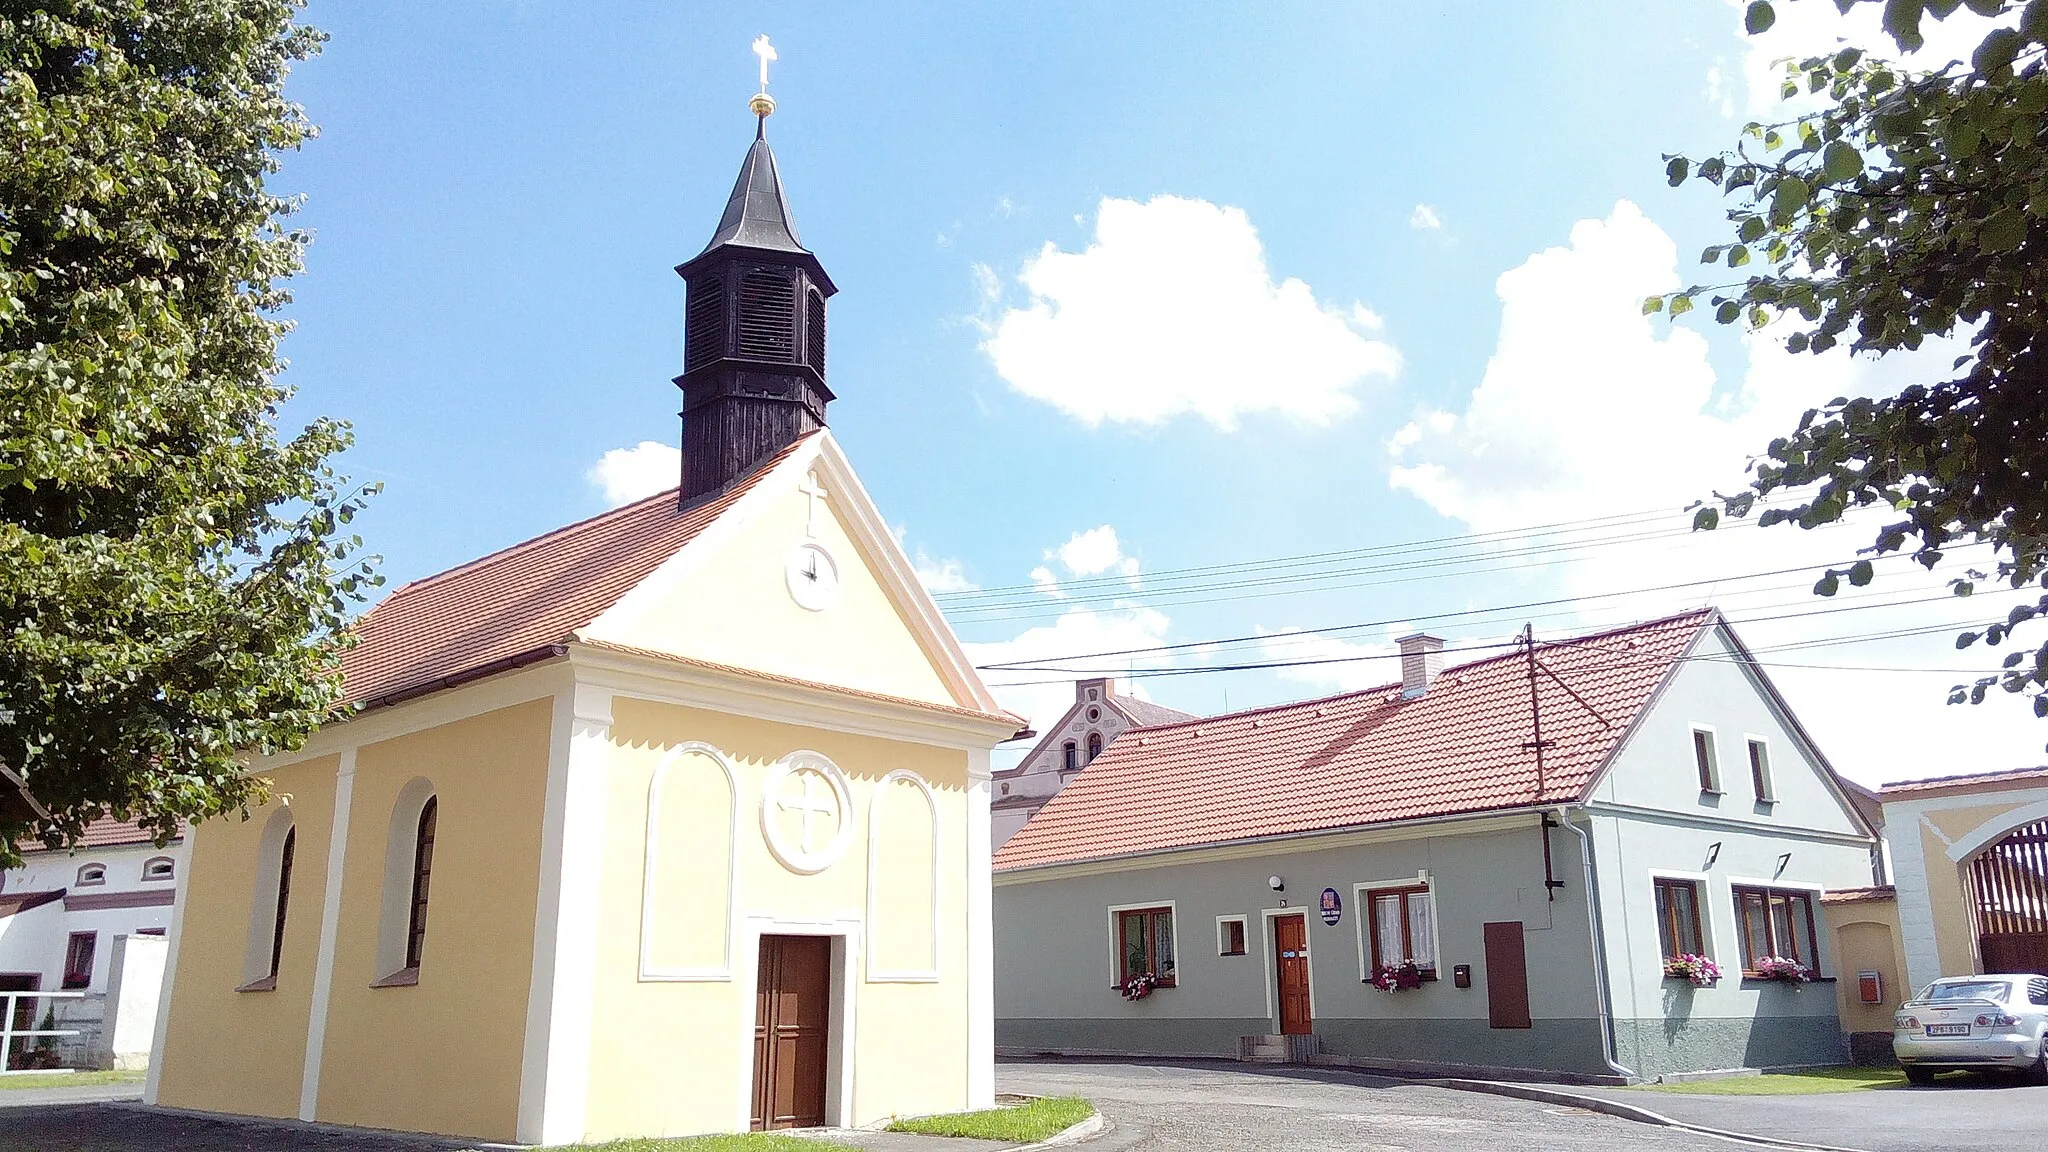 Photo showing: Chapel and town hall in Mezholezy (near Horšovský Týn), Plzeň Region, Czech Republic.